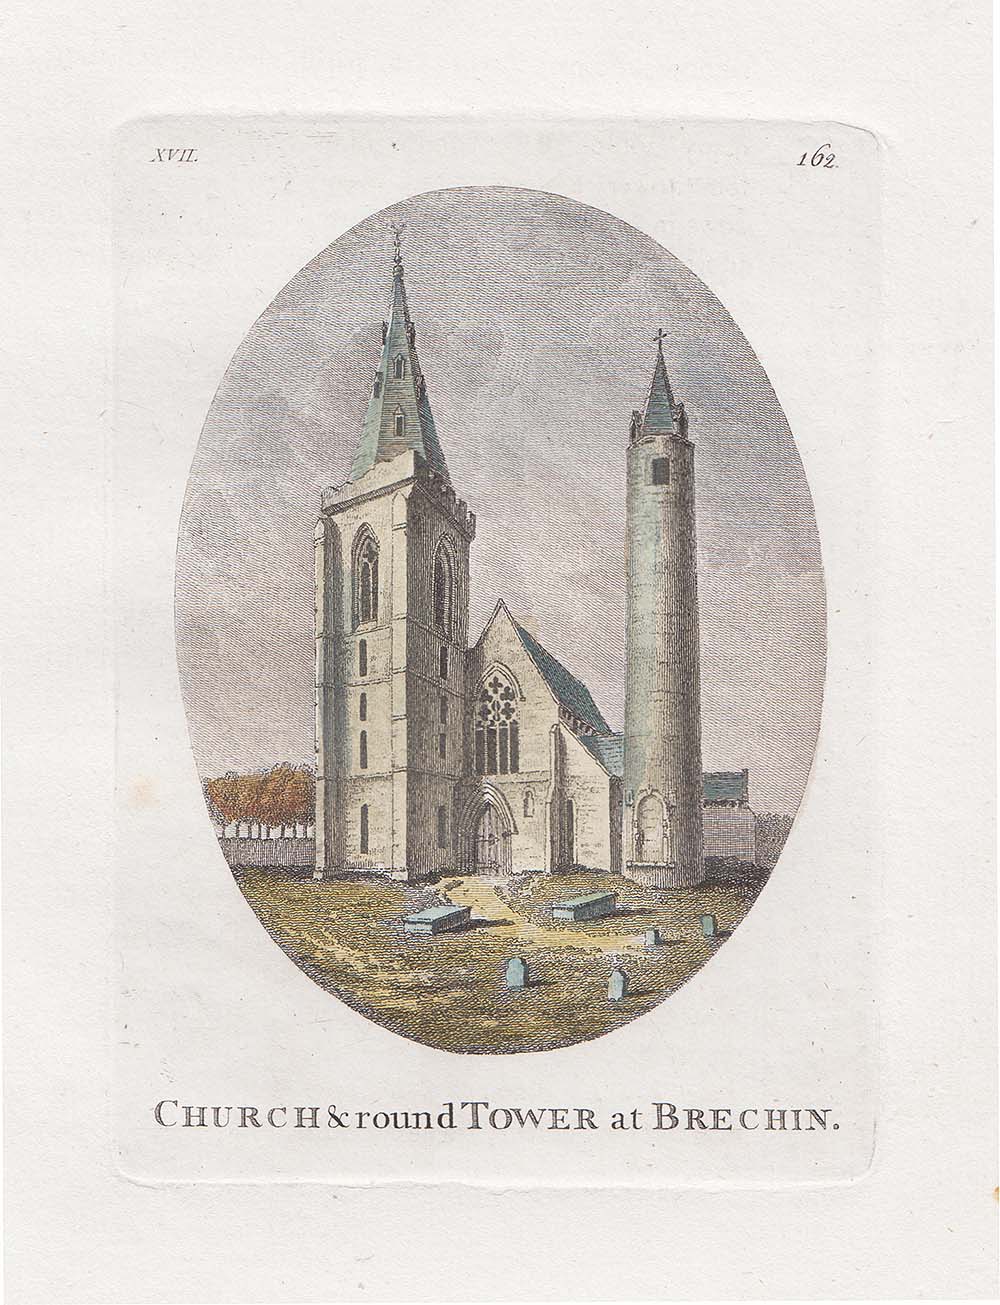 Church and round Tower at Brechin.